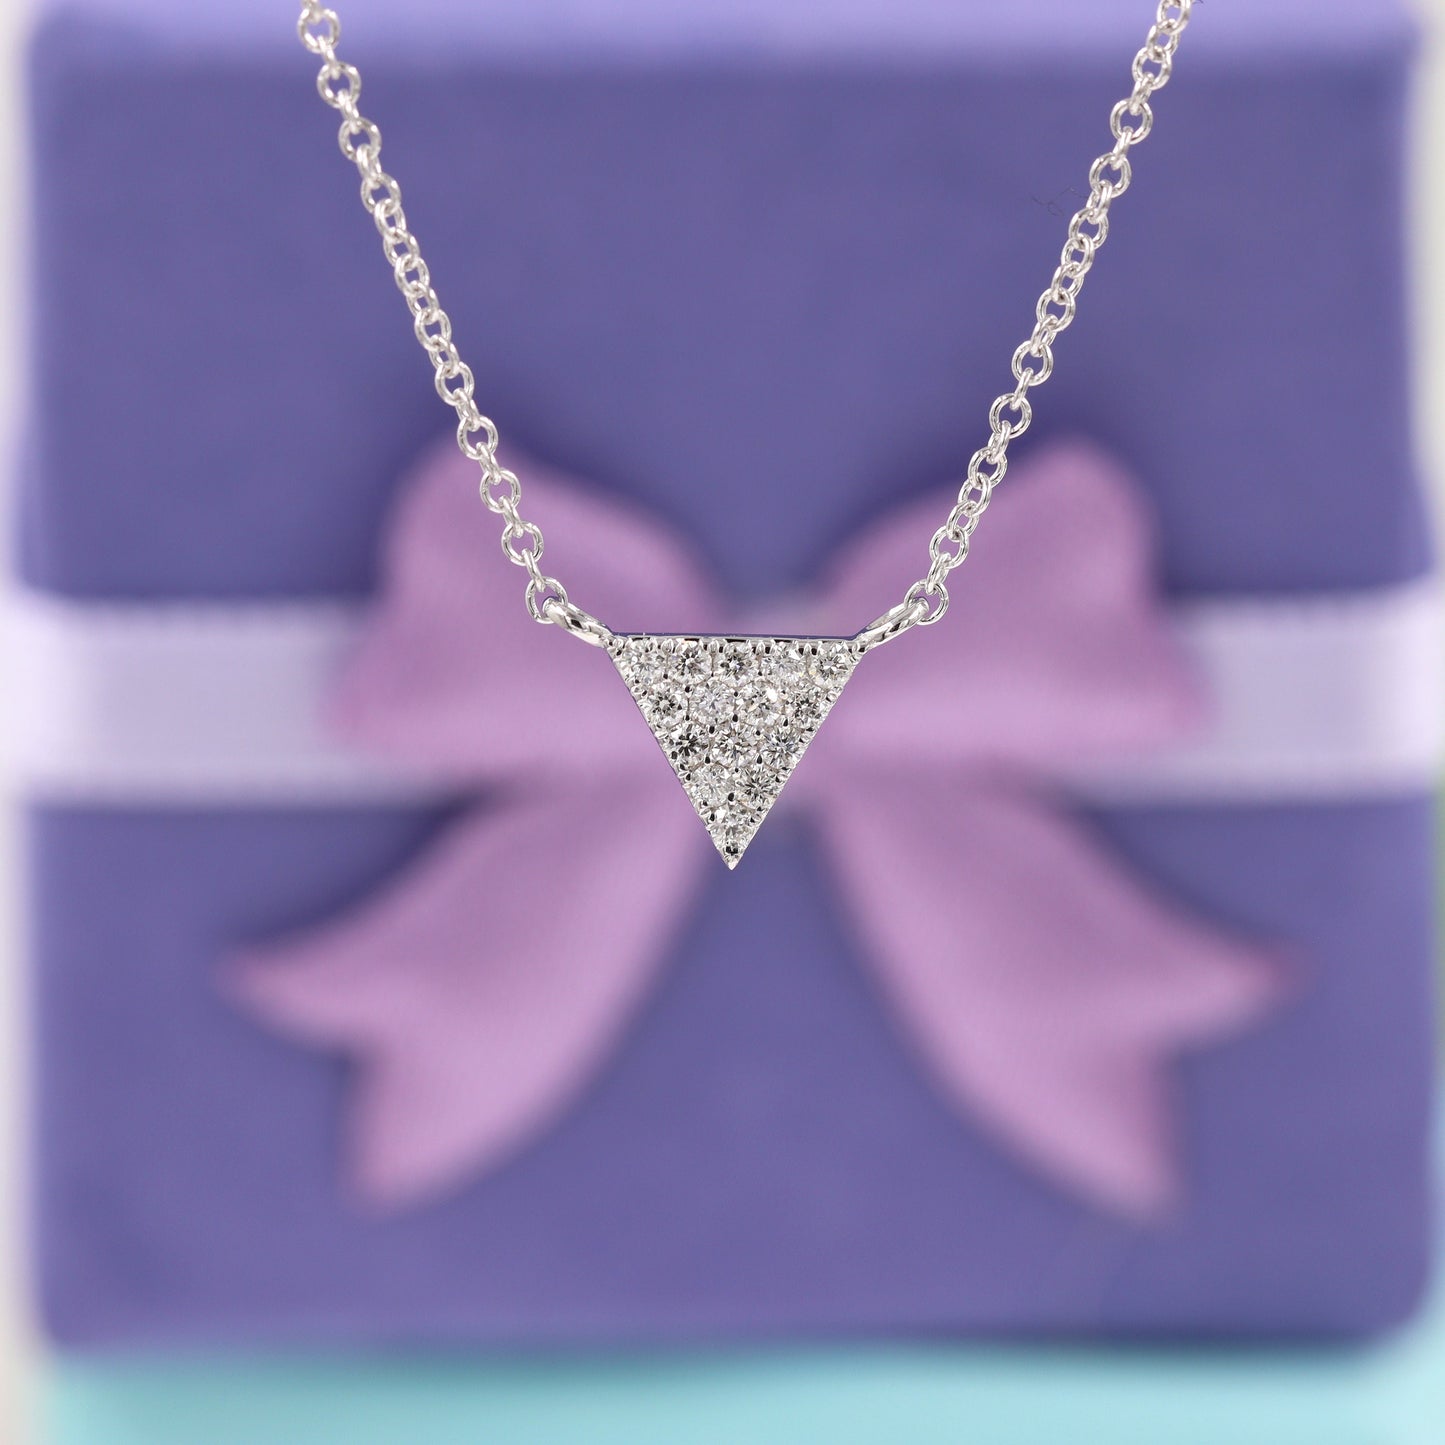 Diamond Necklace/ Round Diamond Triangle / Simple Diamond Necklace / 14k Gold Dainty Diamond Pendant / Layering Diamond Necklace / Gift for Her